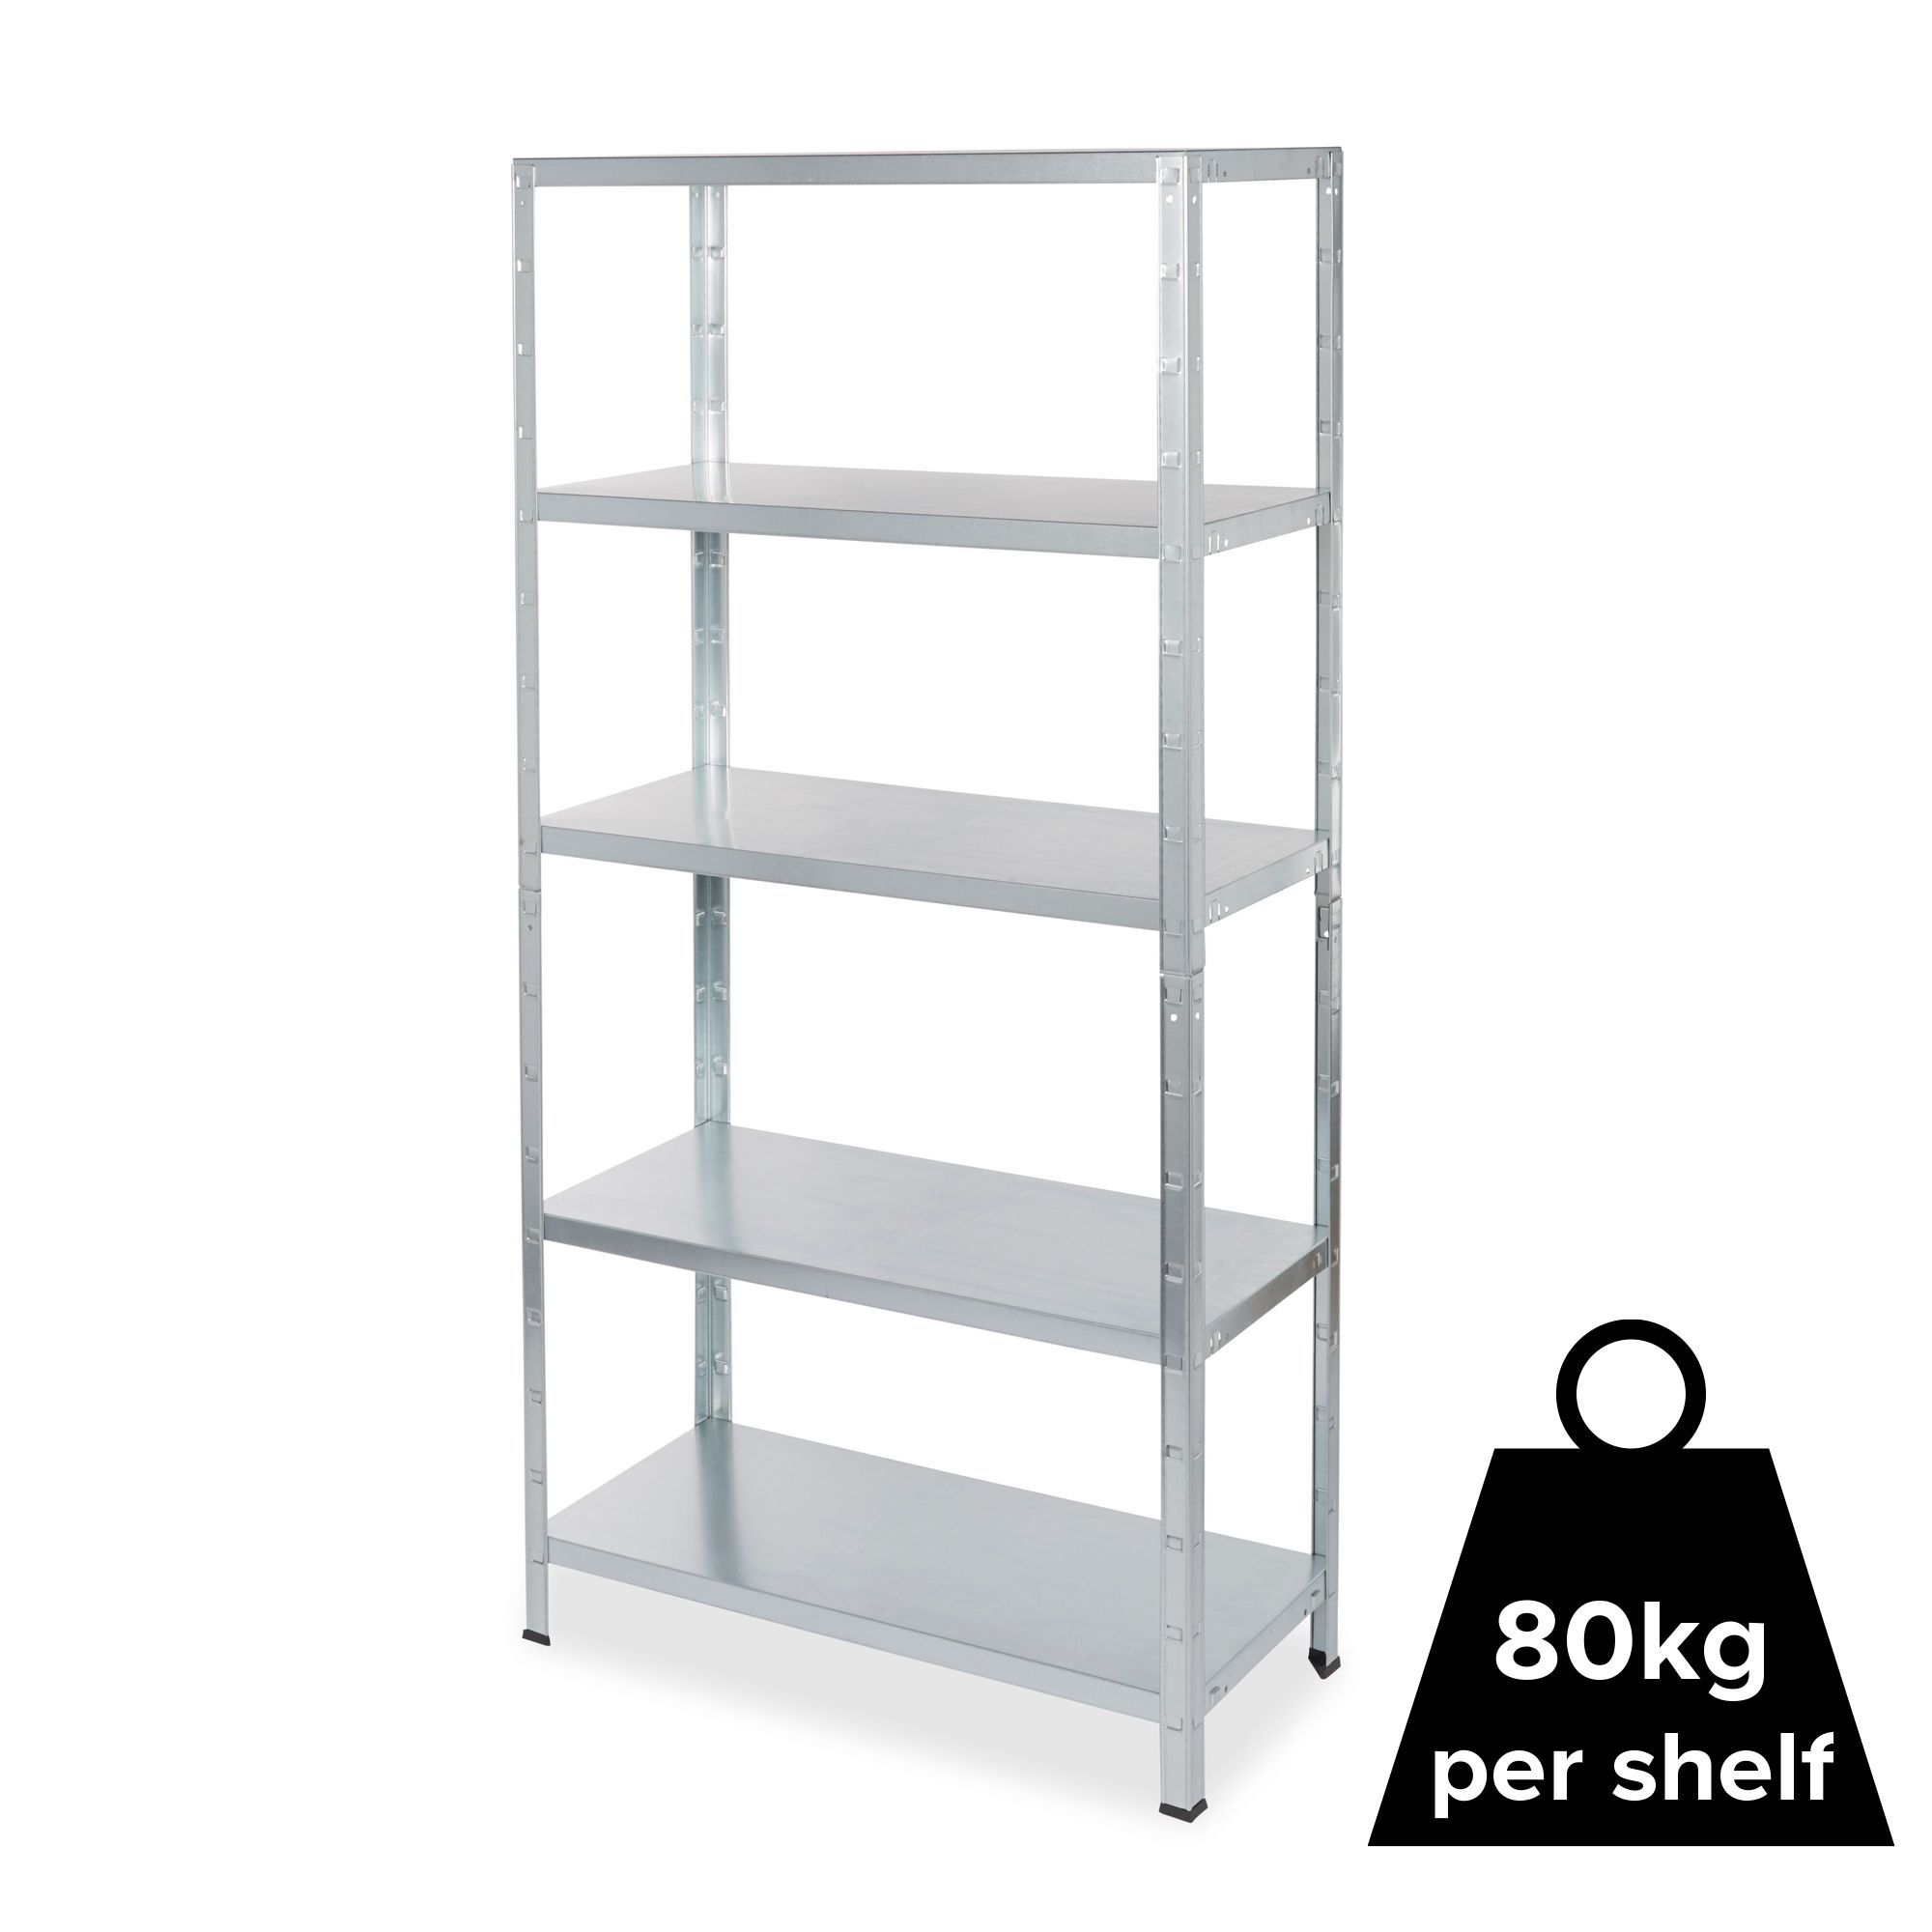 Form Axial 5 shelf Steel Shelving unit (H)1800mm (W)900mm (D)400mm